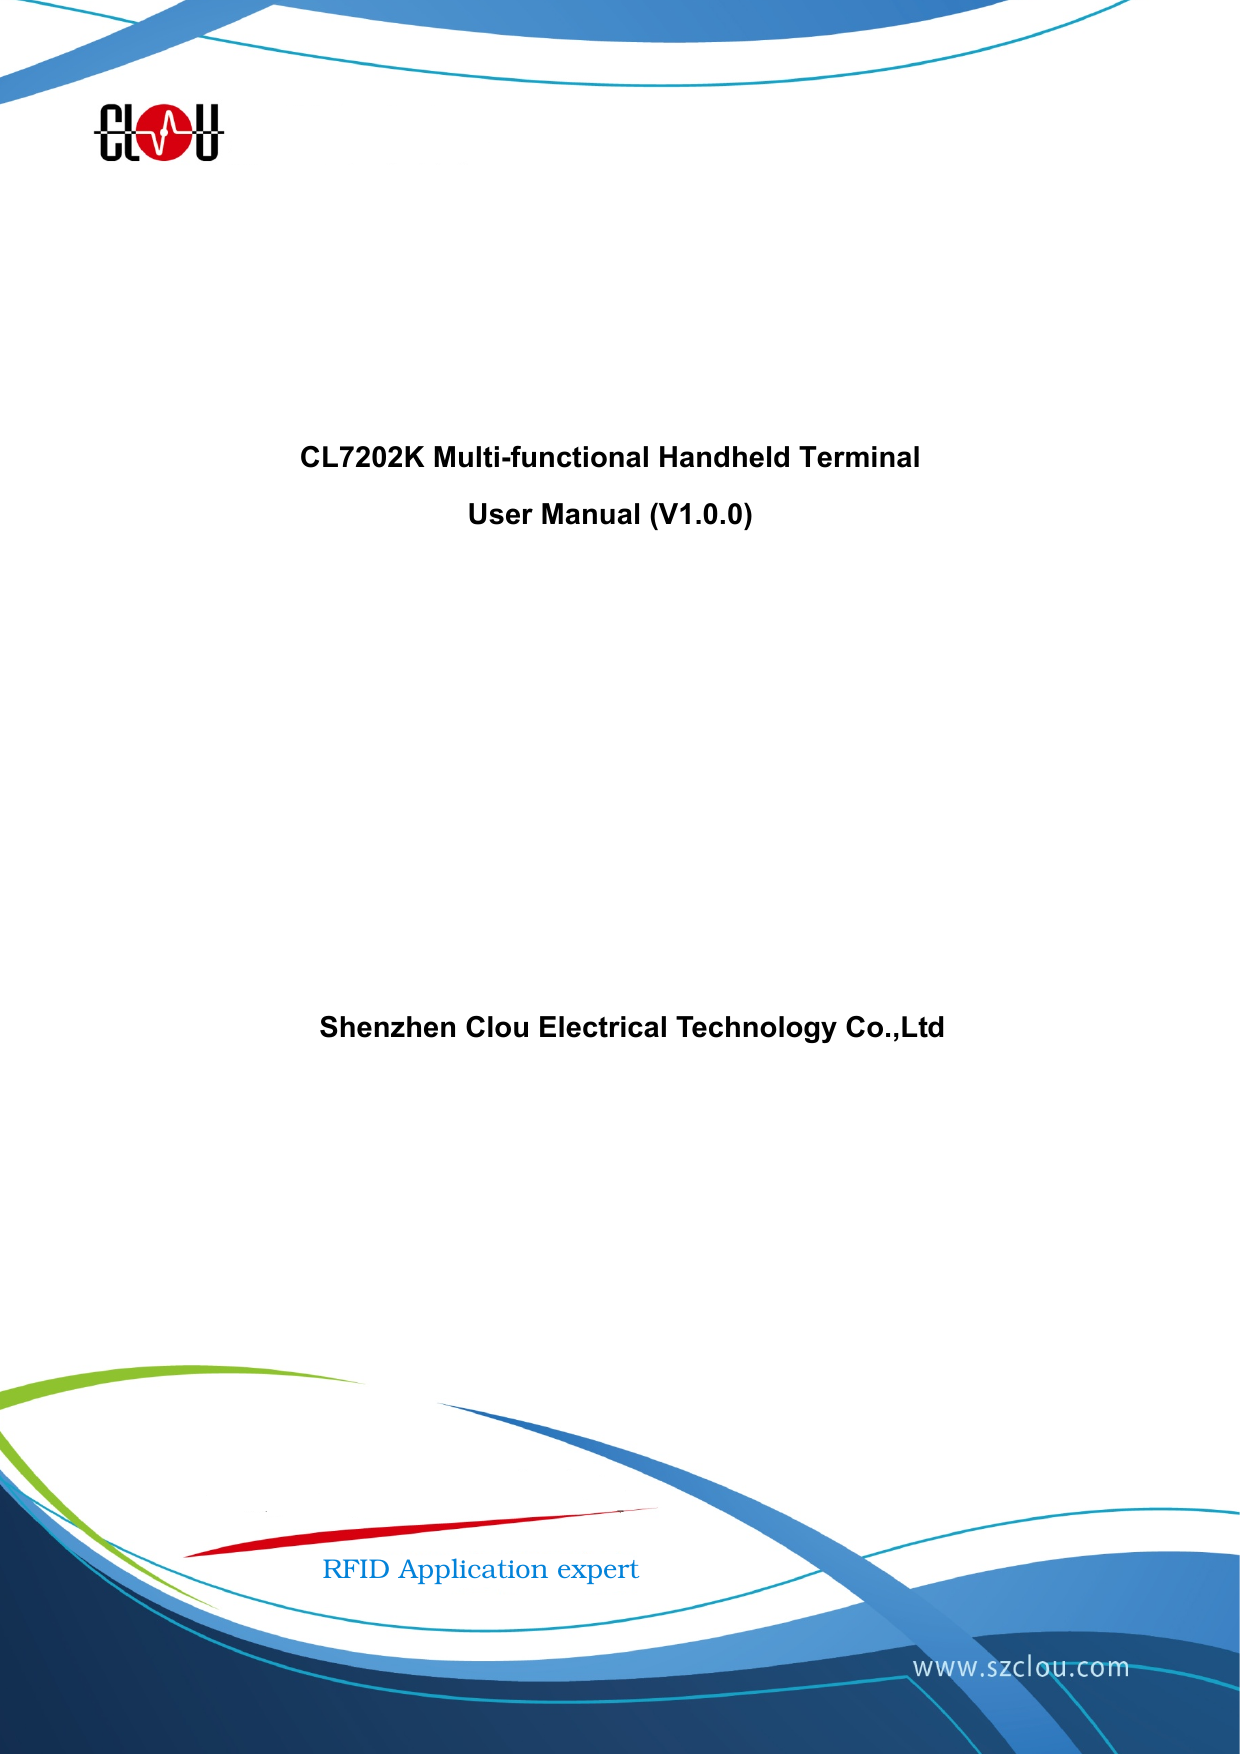       CL7202K Multi-functional Handheld Terminal User Manual (V1.0.0)                                           Shenzhen Clou Electrical Technology Co.,Ltd RFID Application expert